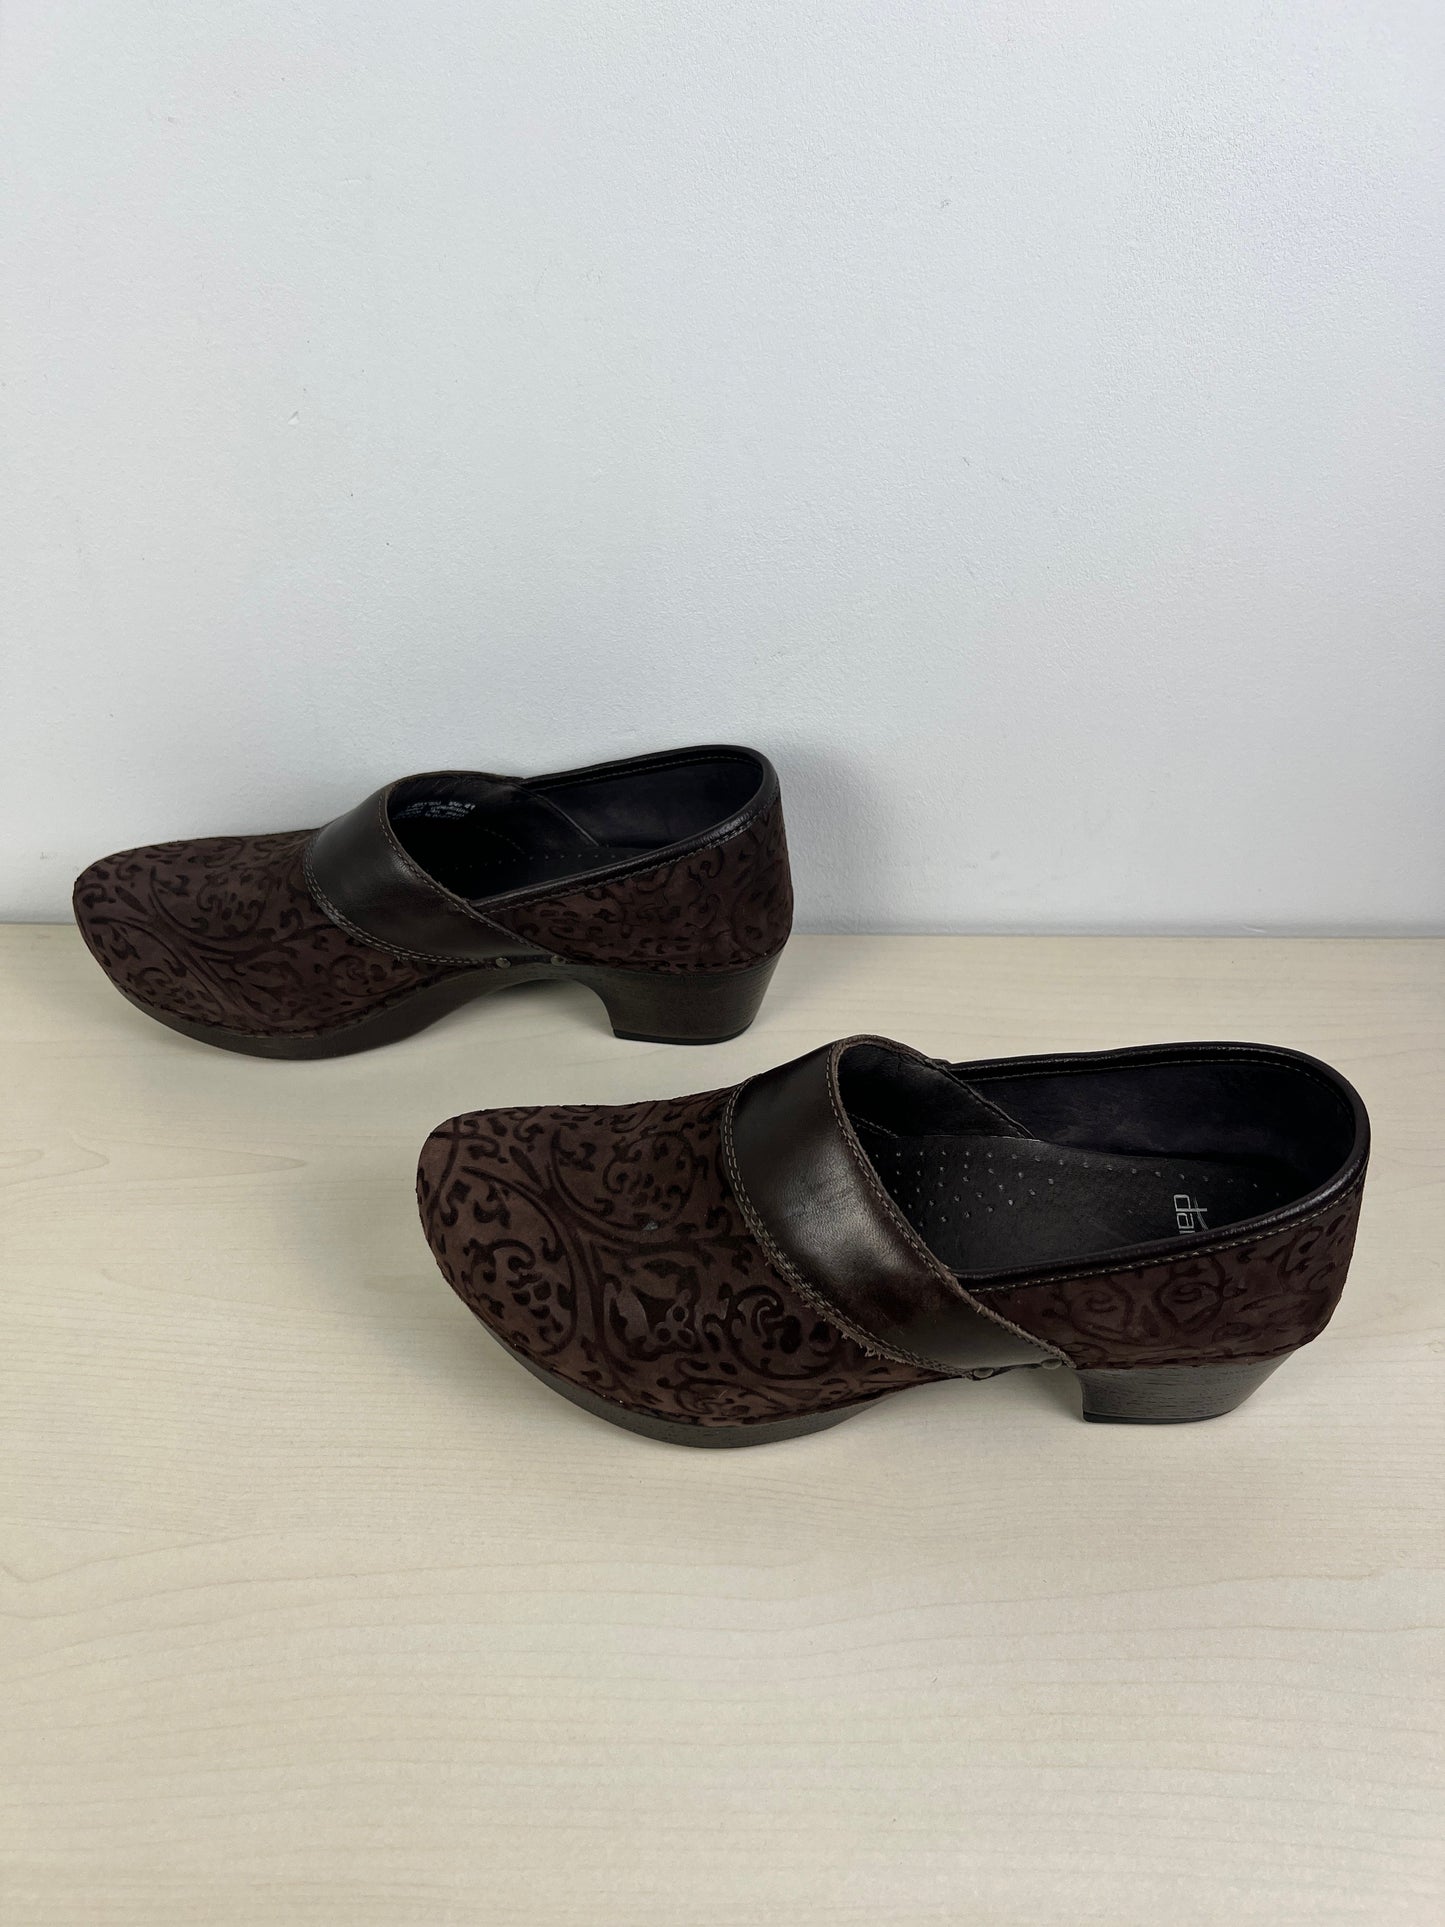 Brown Shoes Heels Block Dansko, Size 10.5